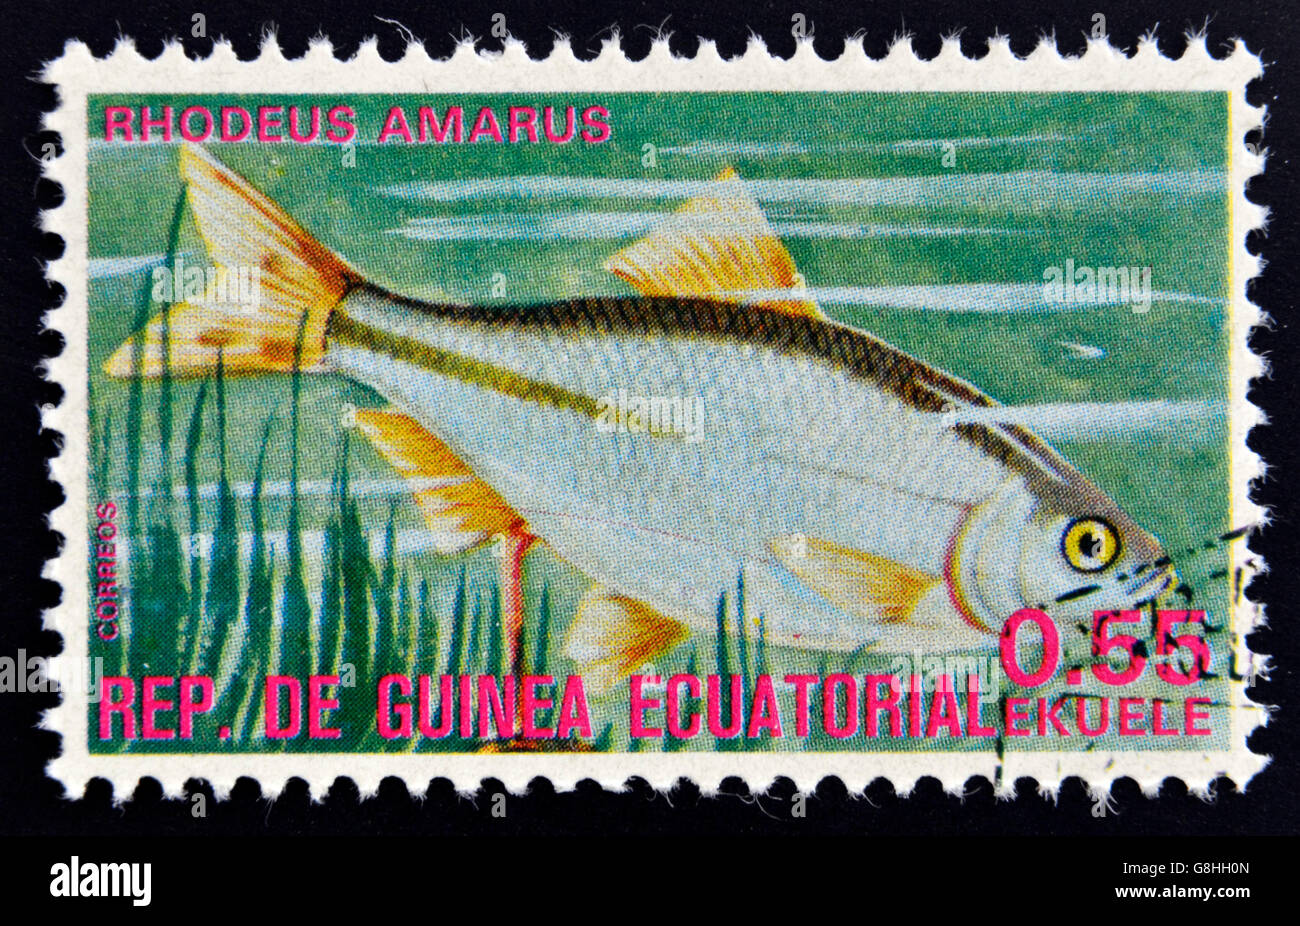 EQUATORIAL GUINEA - CIRCA 1974: A stamp printed in Guinea Ecuatorial dedicated to exotic fish shows rhodeus amarus, circa 1974. Stock Photo